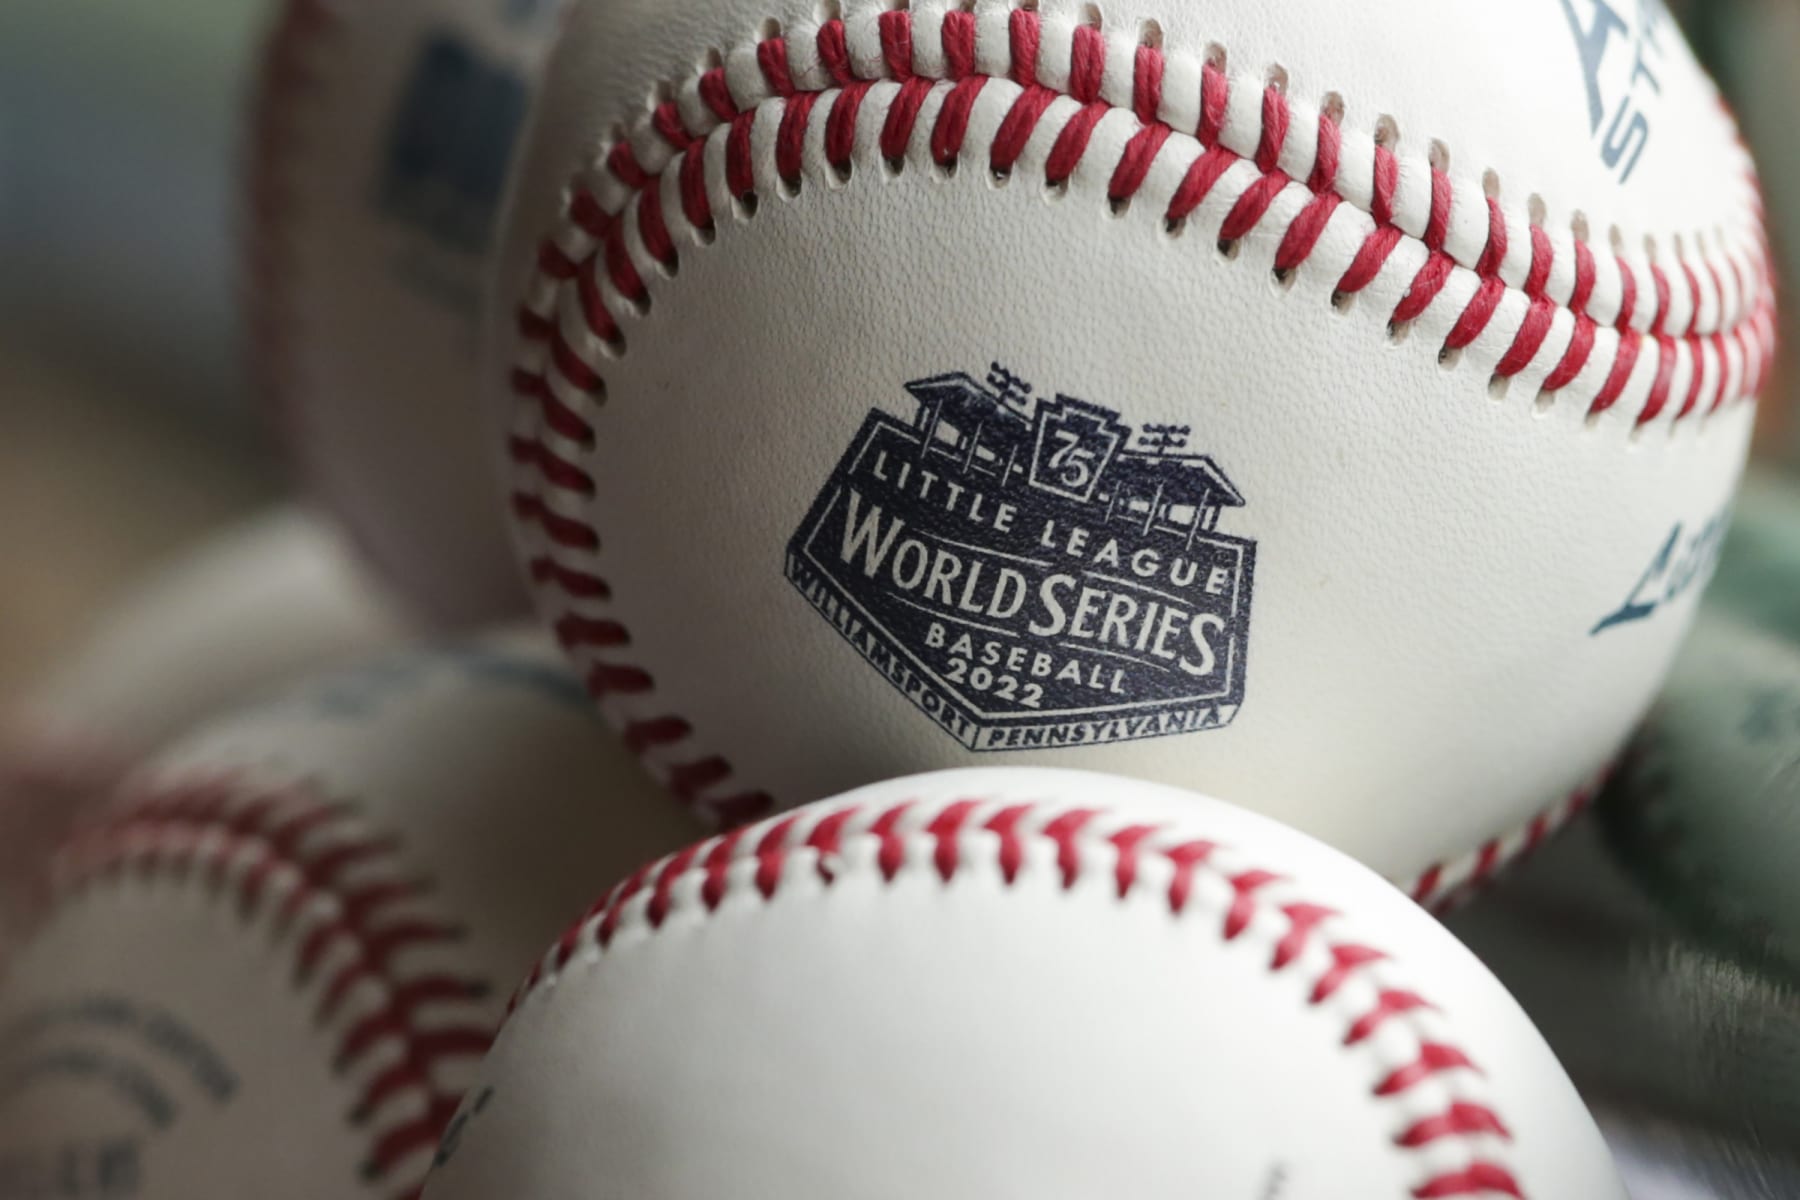 California, Curaçao Little League Baseball World Series title game